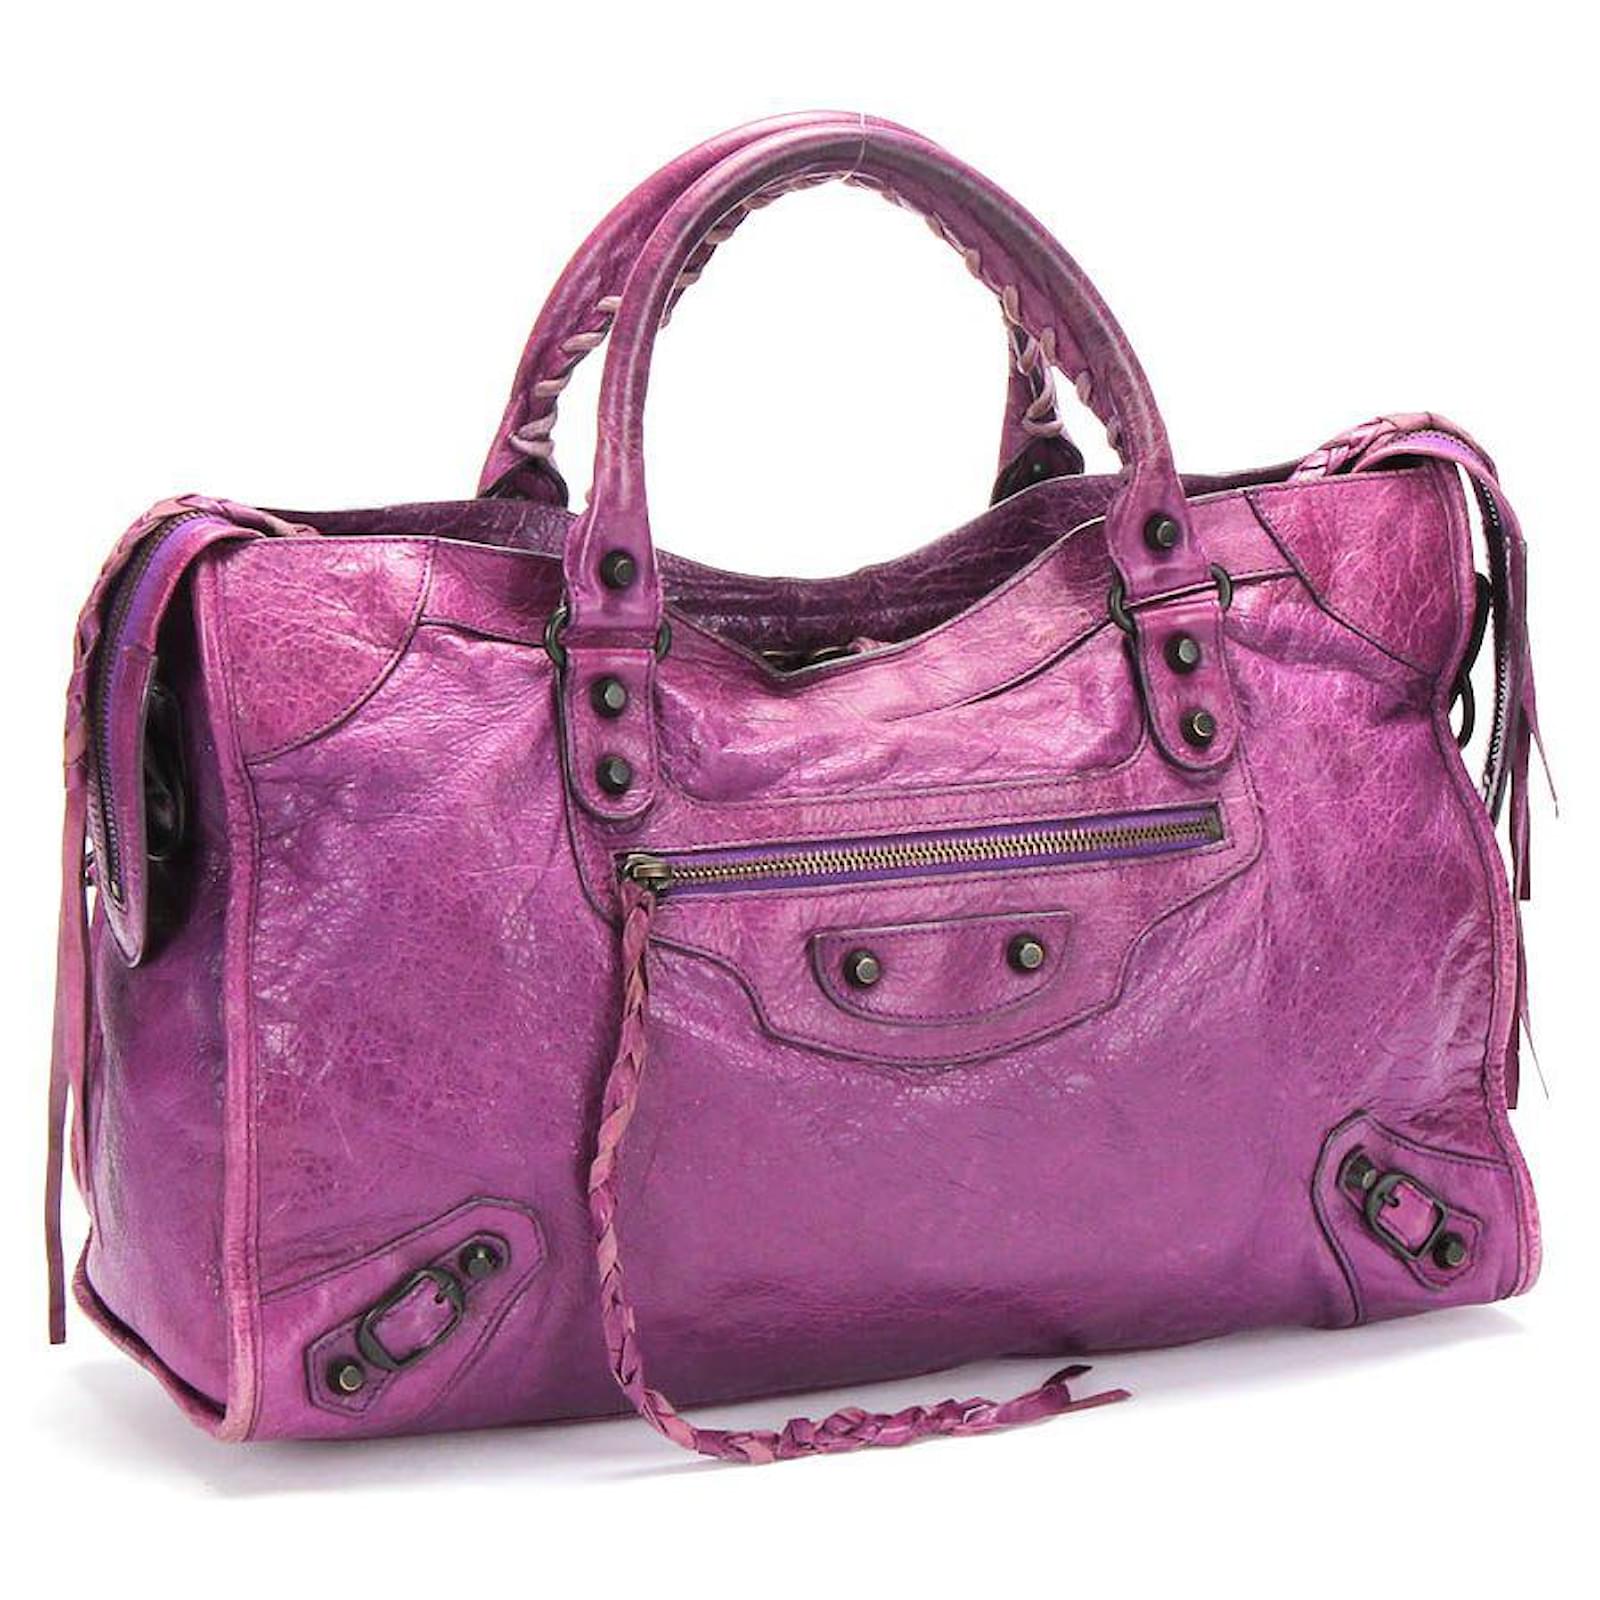 Balenciaga the City 2 Way Shoulder Bag 115748 in purple Leather